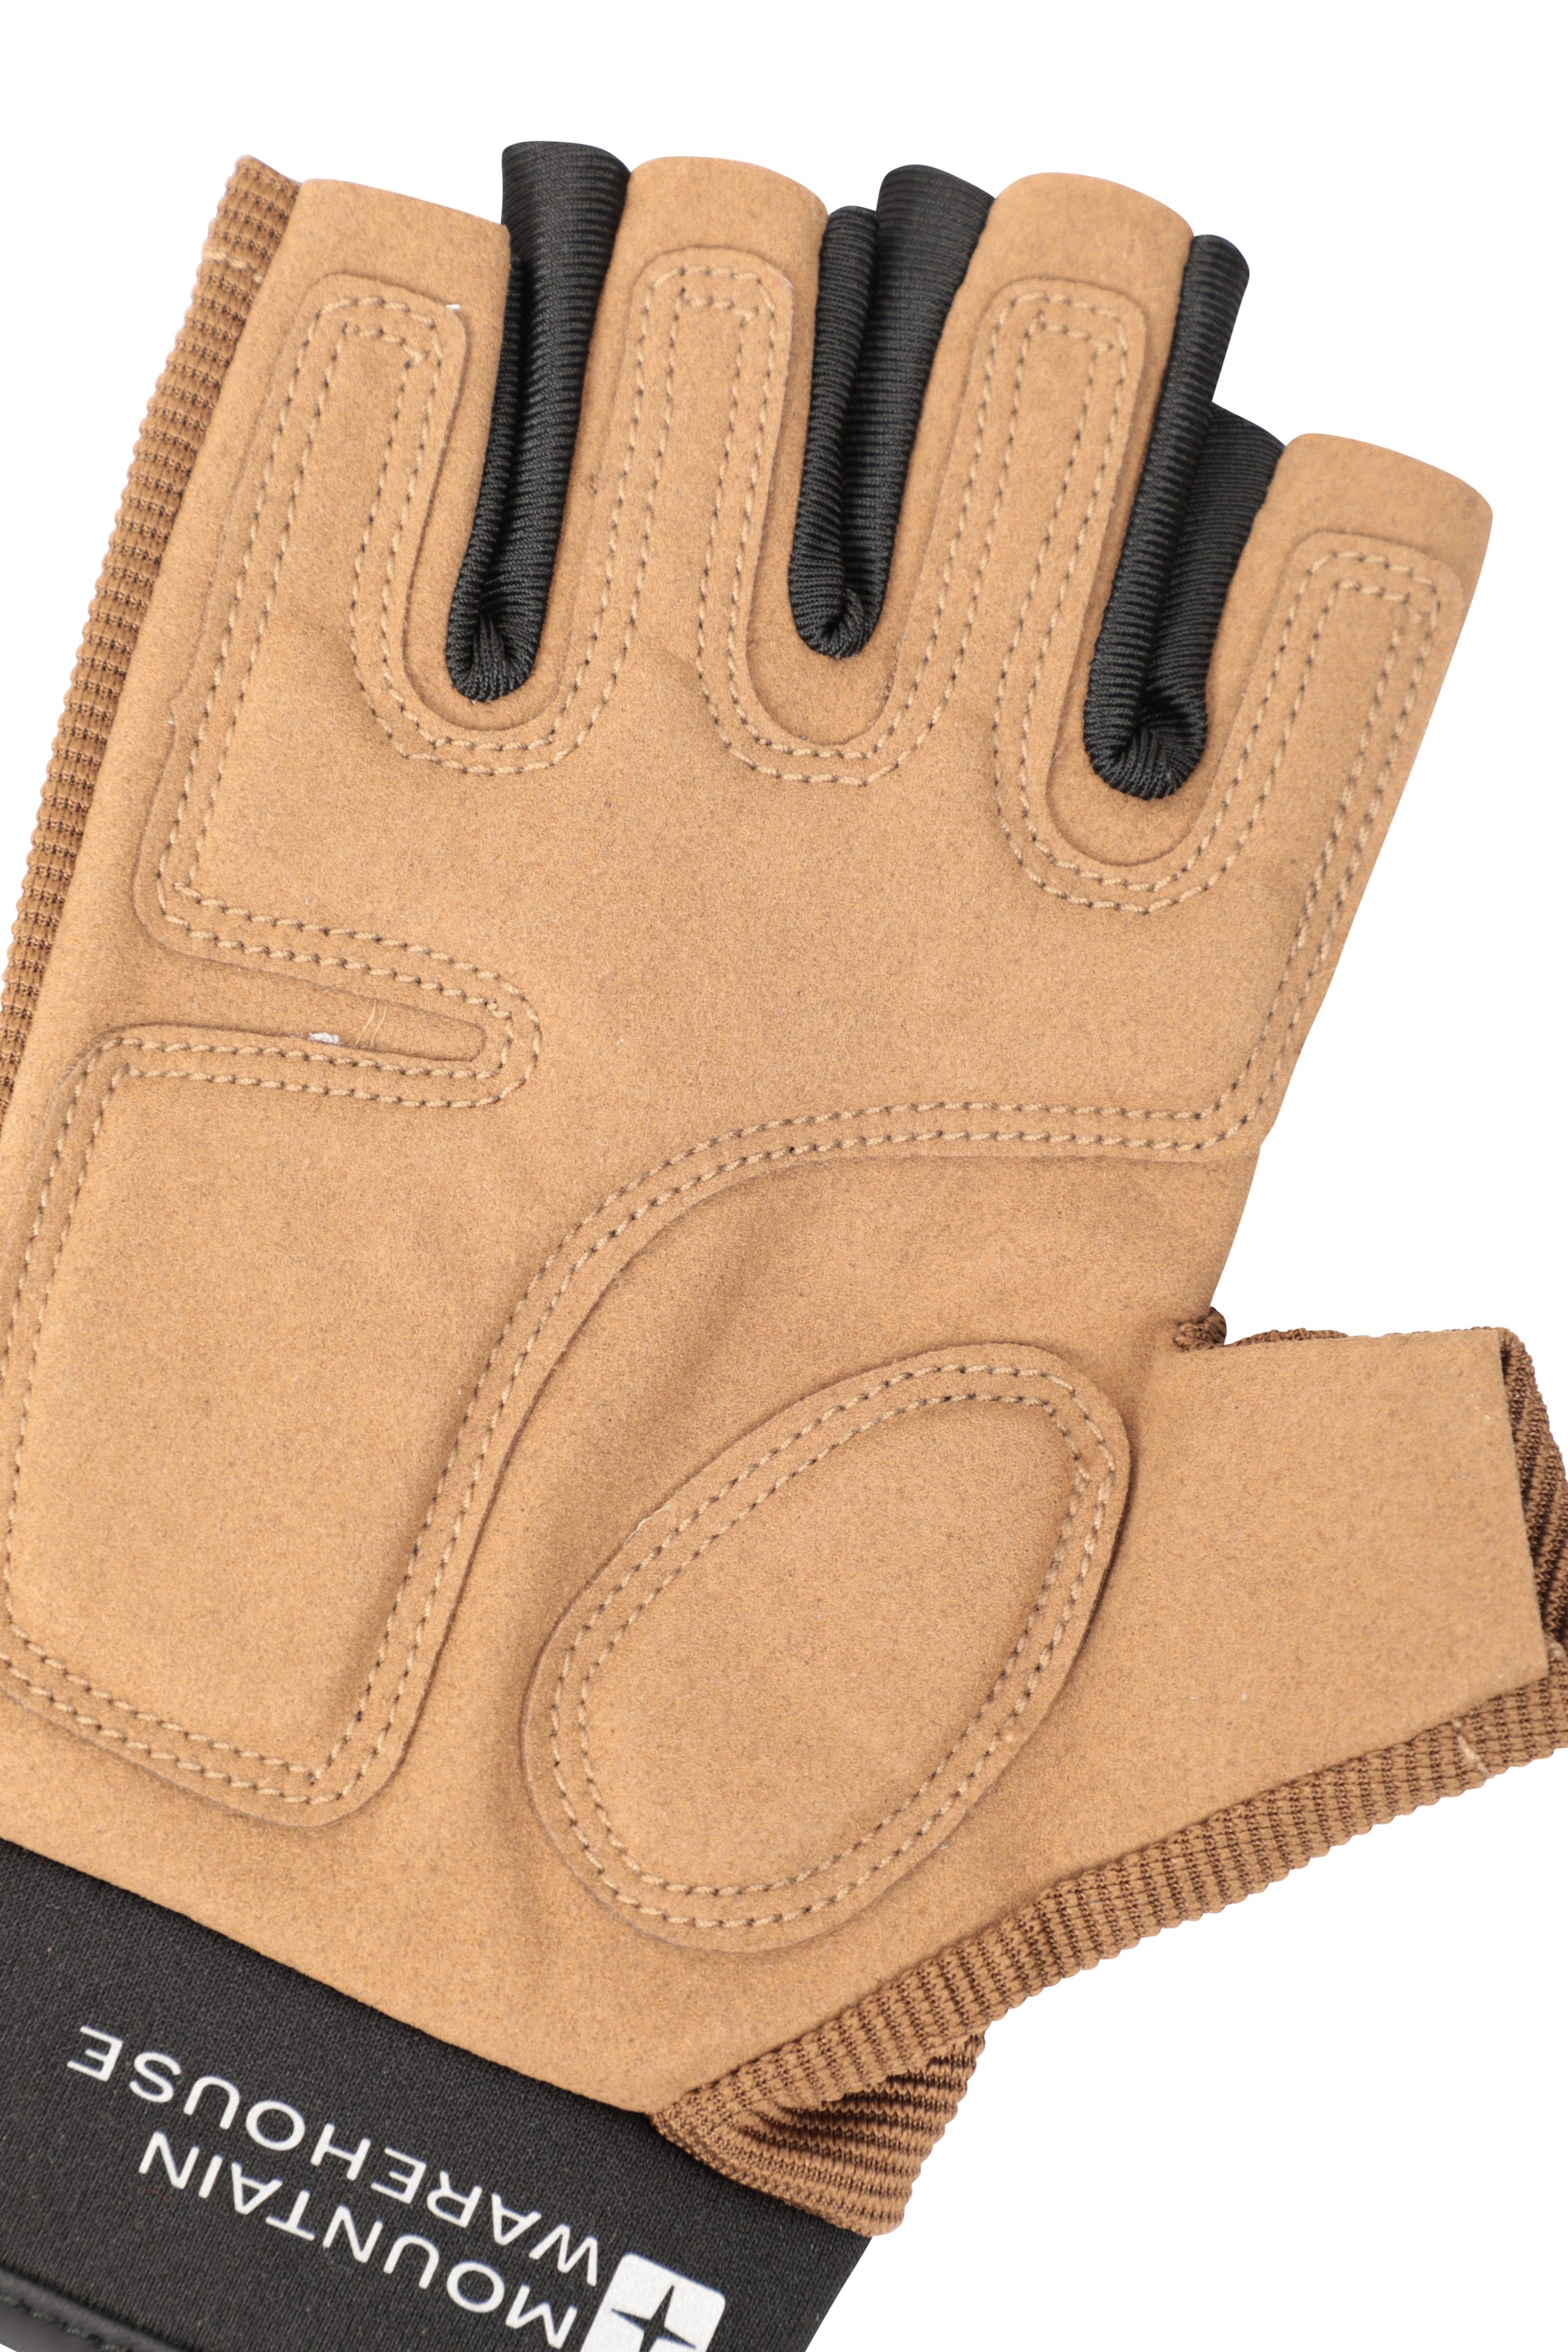 Mountain Warehouse Universal Fingerless Fishing Gloves Khaki Medium, Fishing  Gloves -  Canada